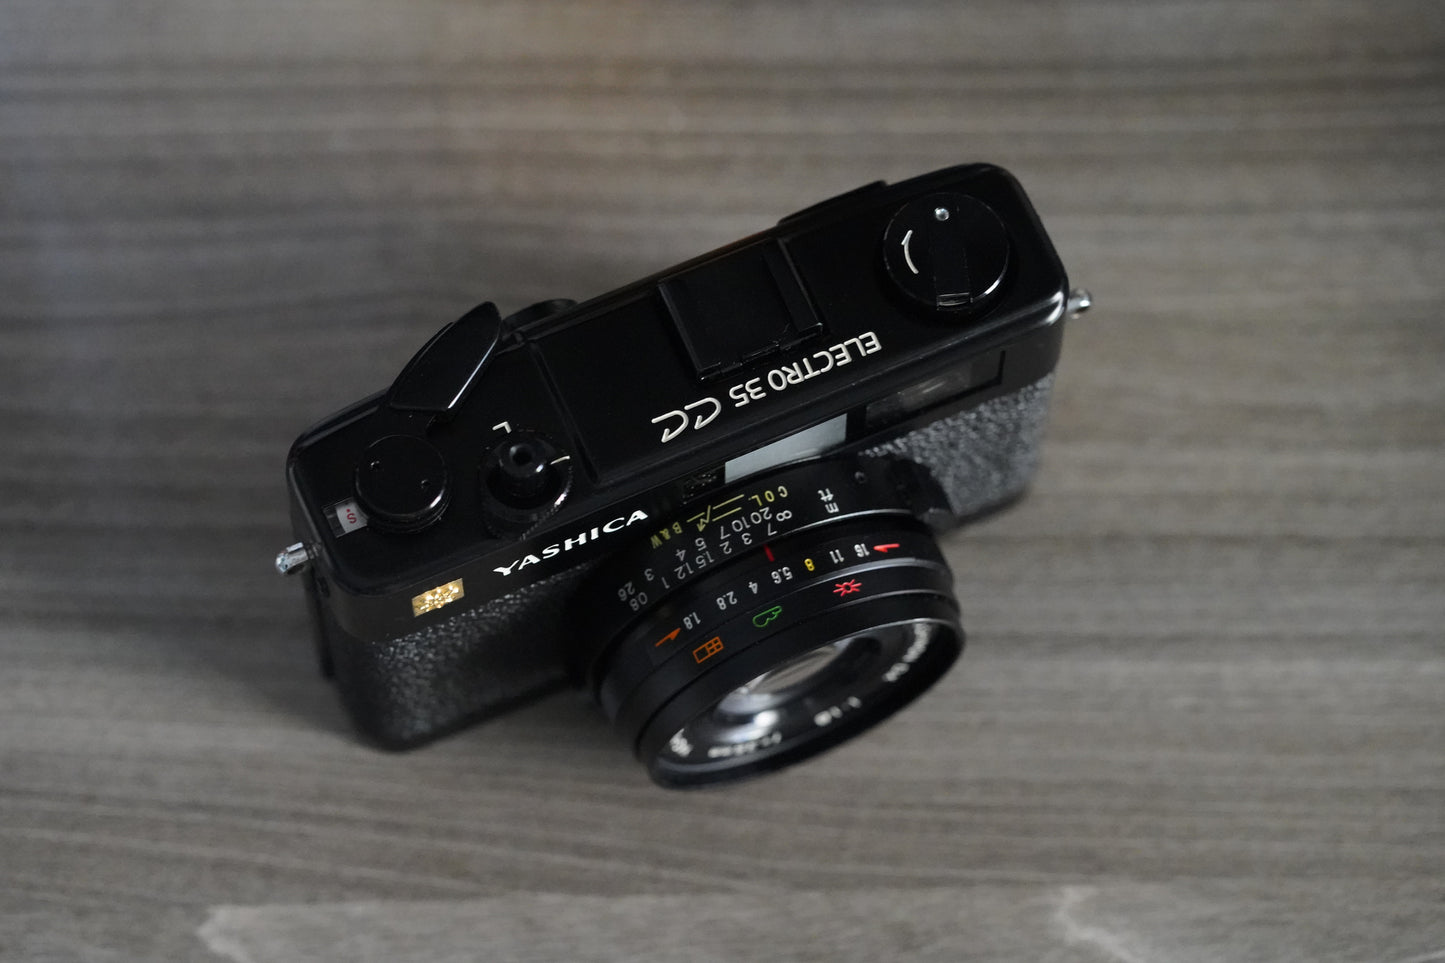 Yashica Electro 35 CC Rangefinder Film Camera 35mm f/1.8